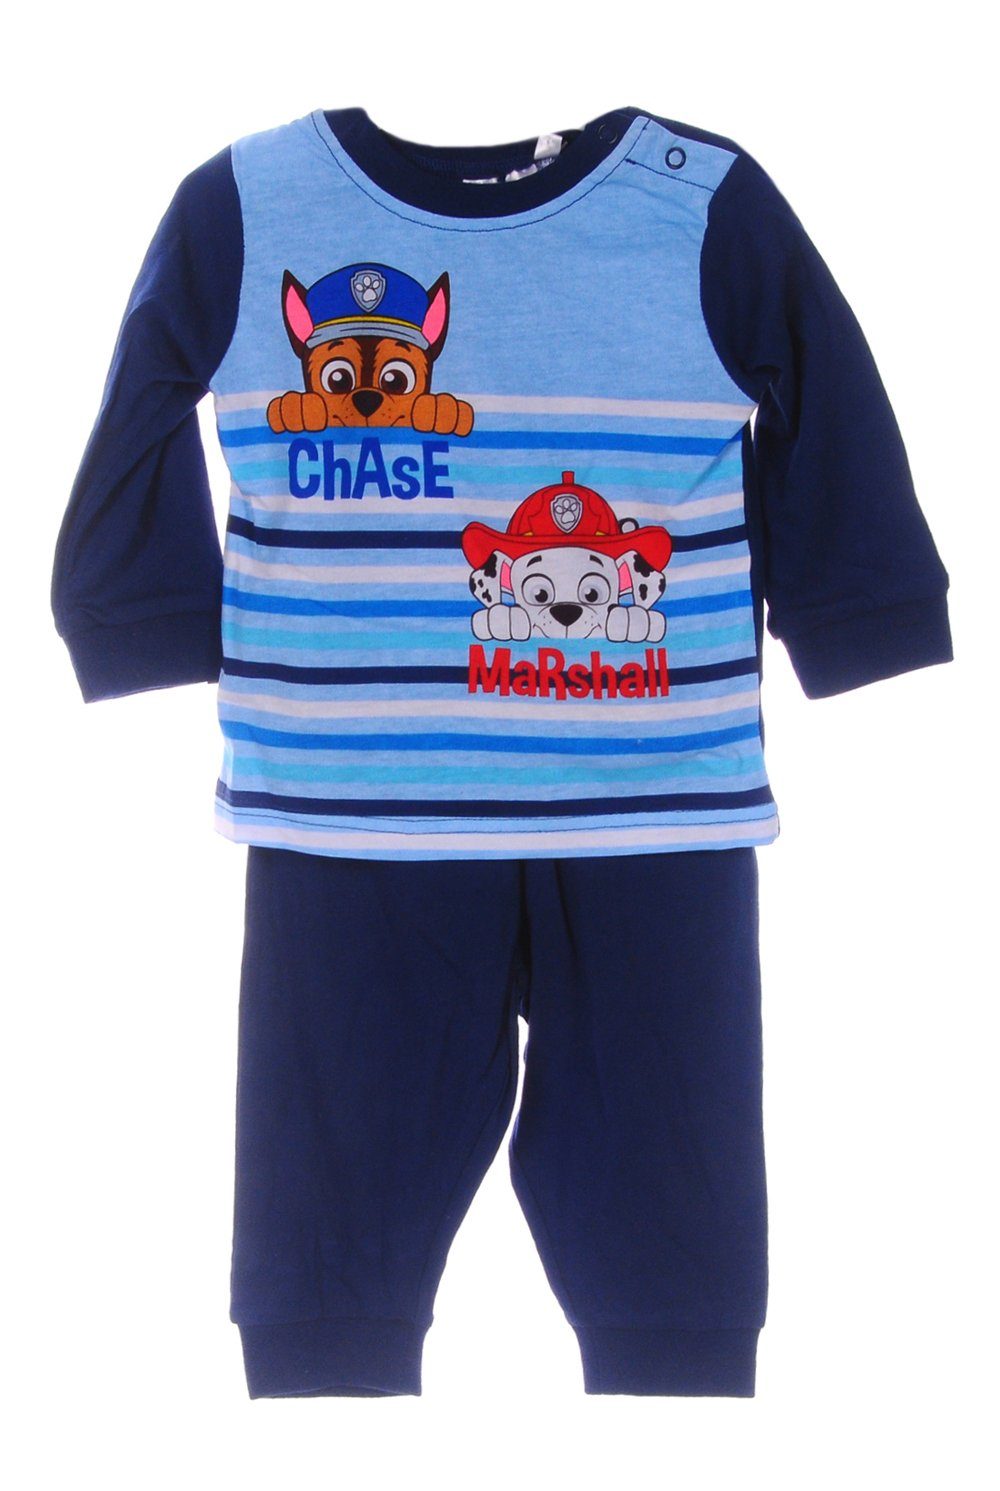 Pyjama Schlafanzug Pyjama Babys Kinder Zweiteiler Hose Shirt 68 74 80 86